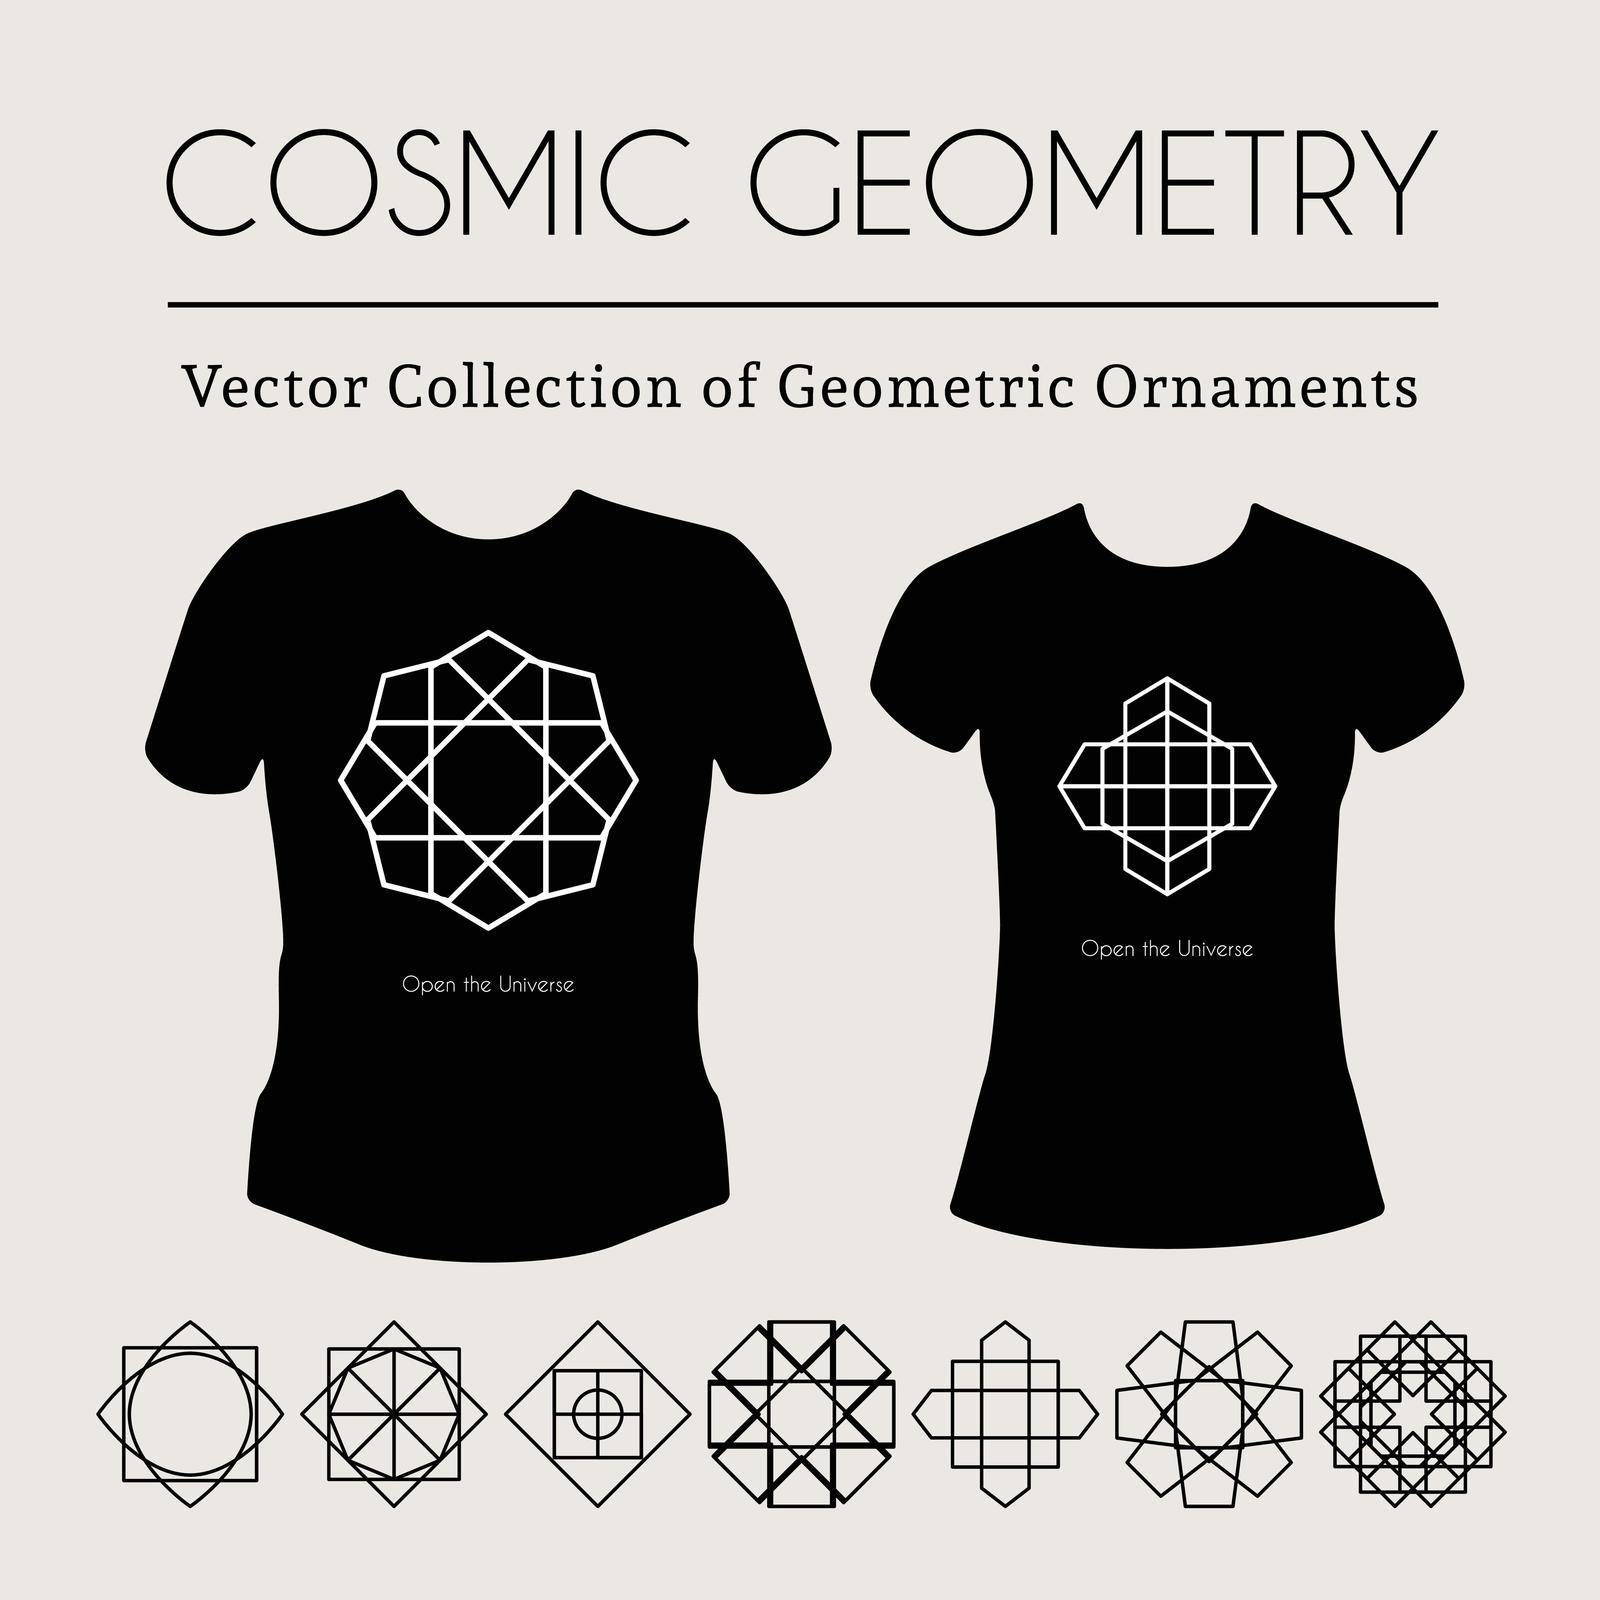 Cosmic Geometry T-Shirt by dacascas